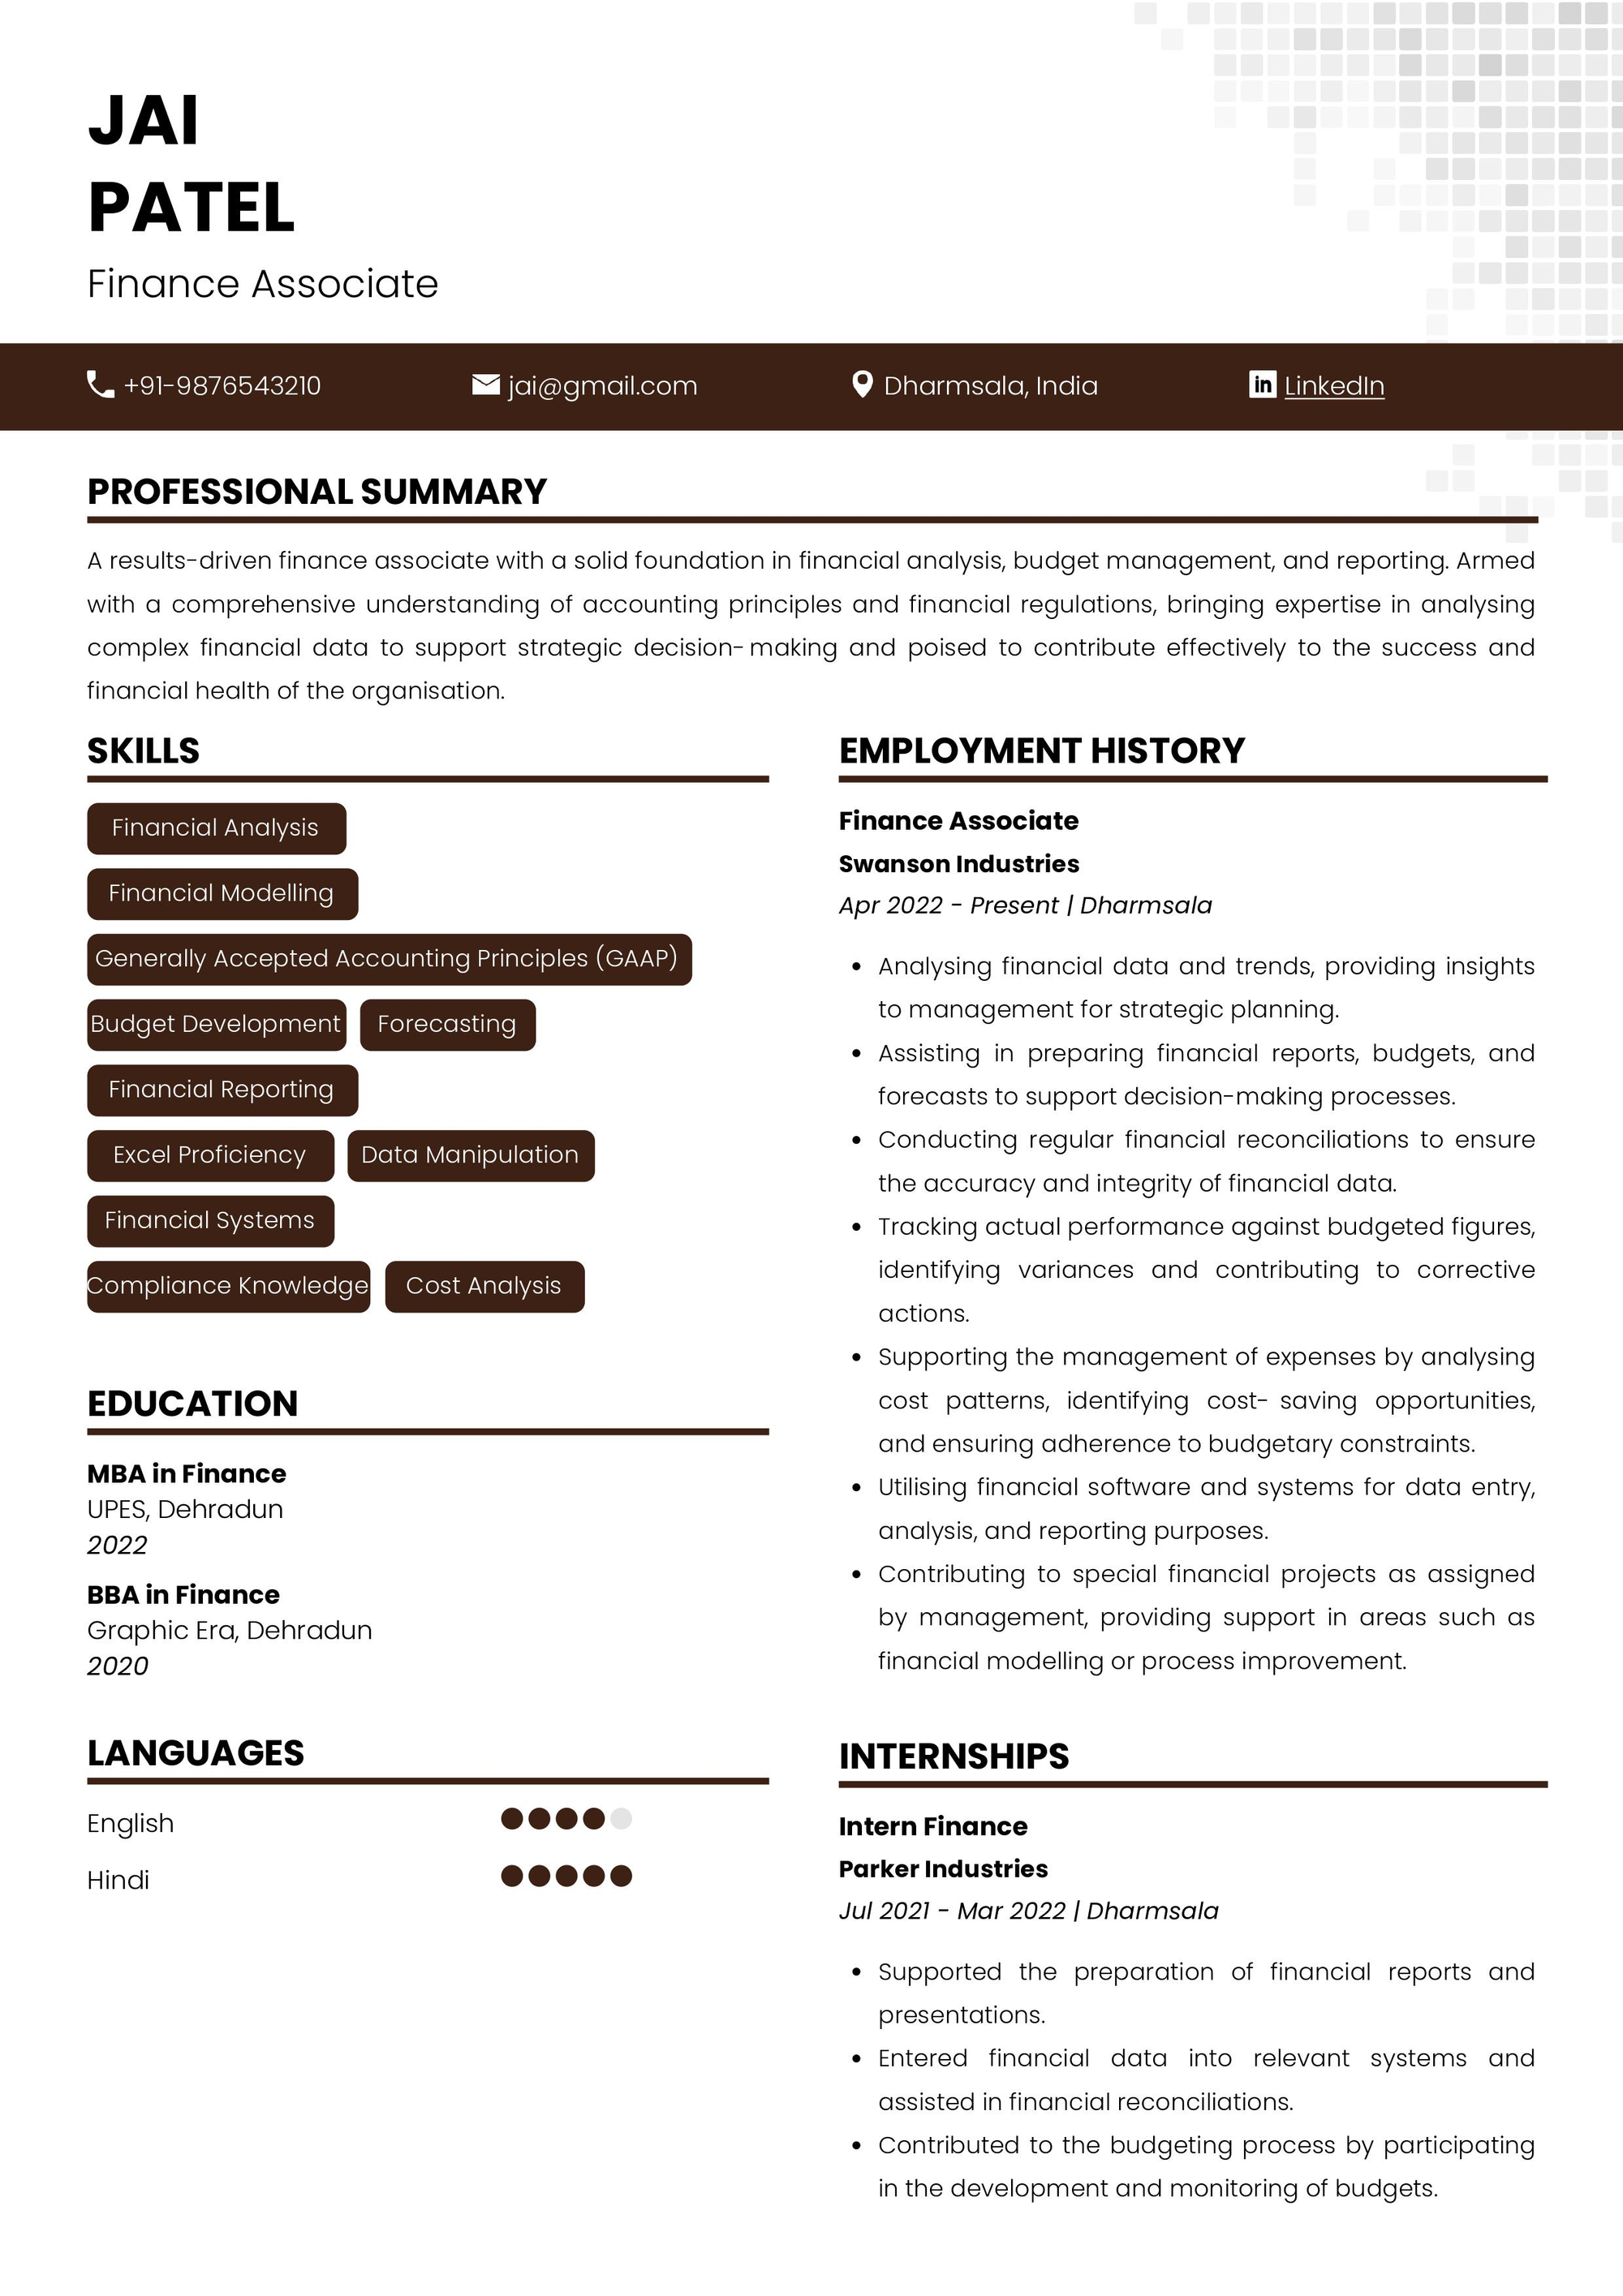 Resume of Finance Associate built on Resumod